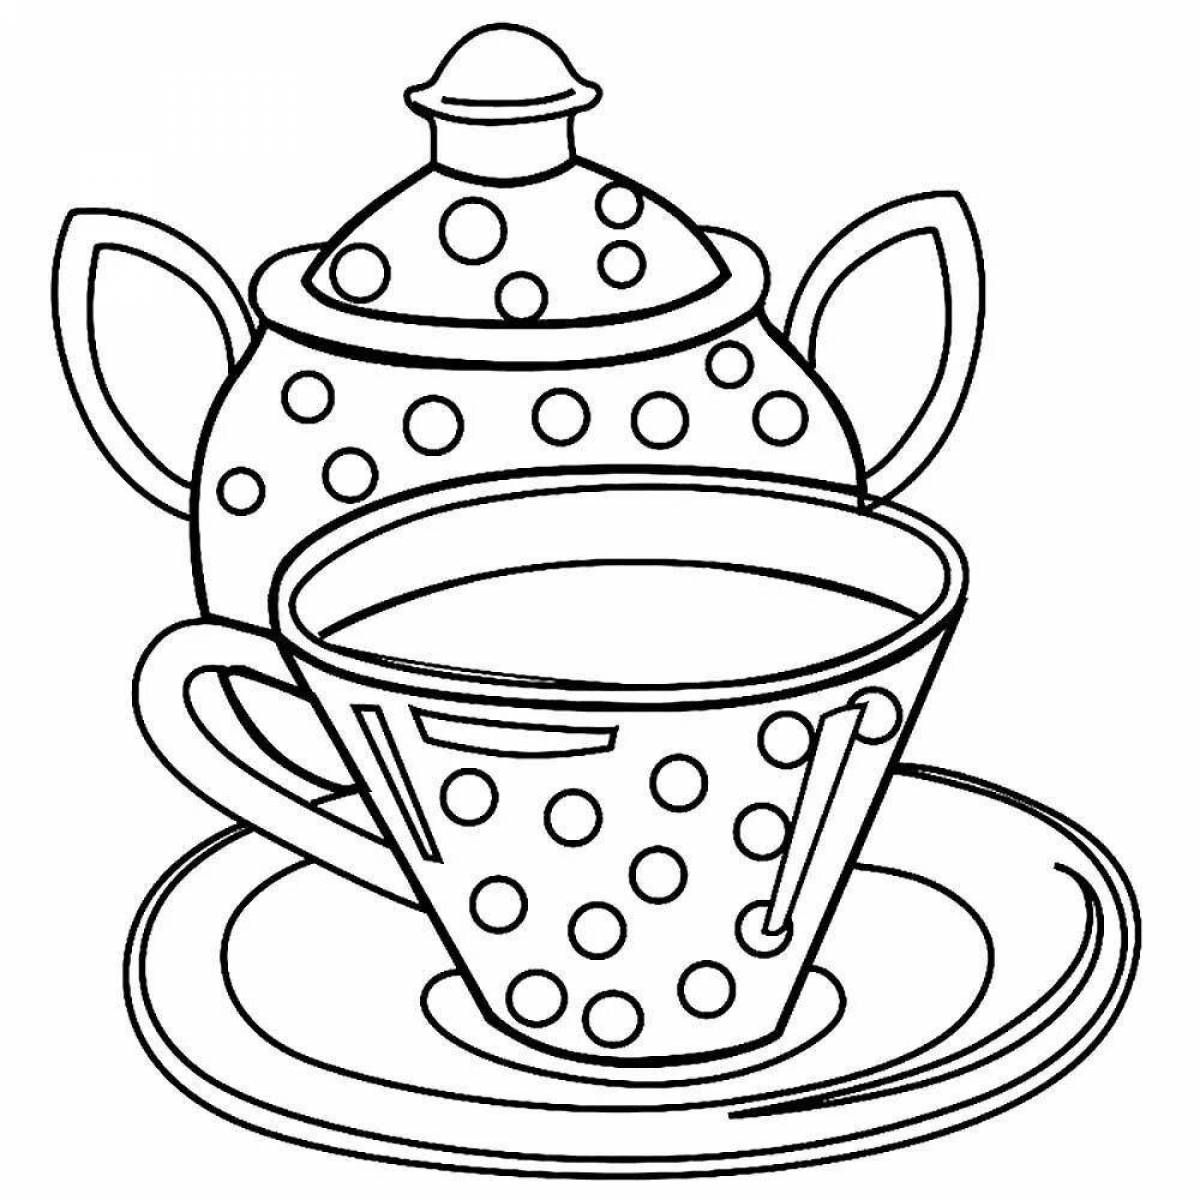 Serene tea set coloring page